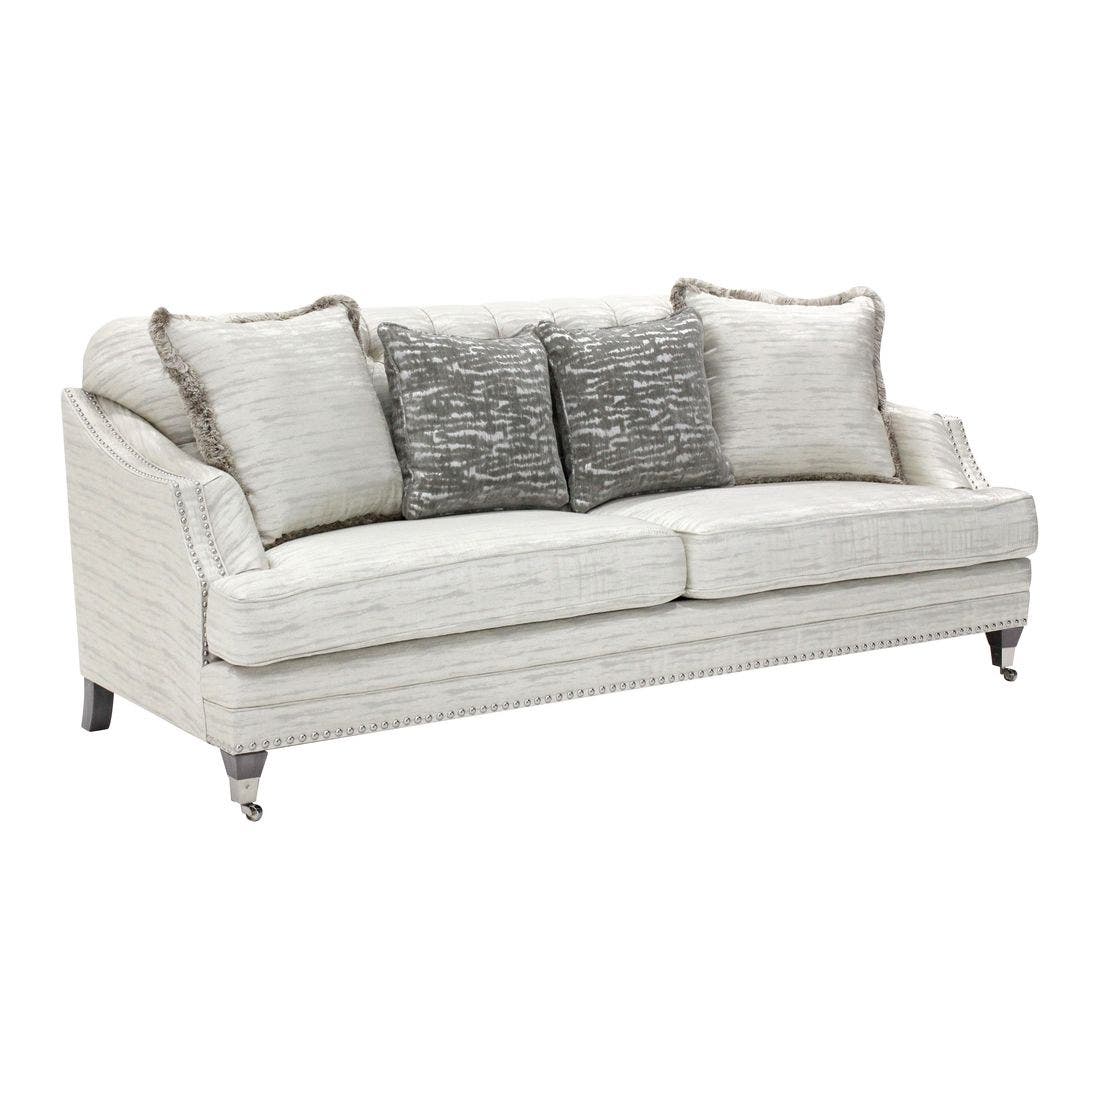 19155781-hanalo-furniture-sofa-recliner-sofas-01